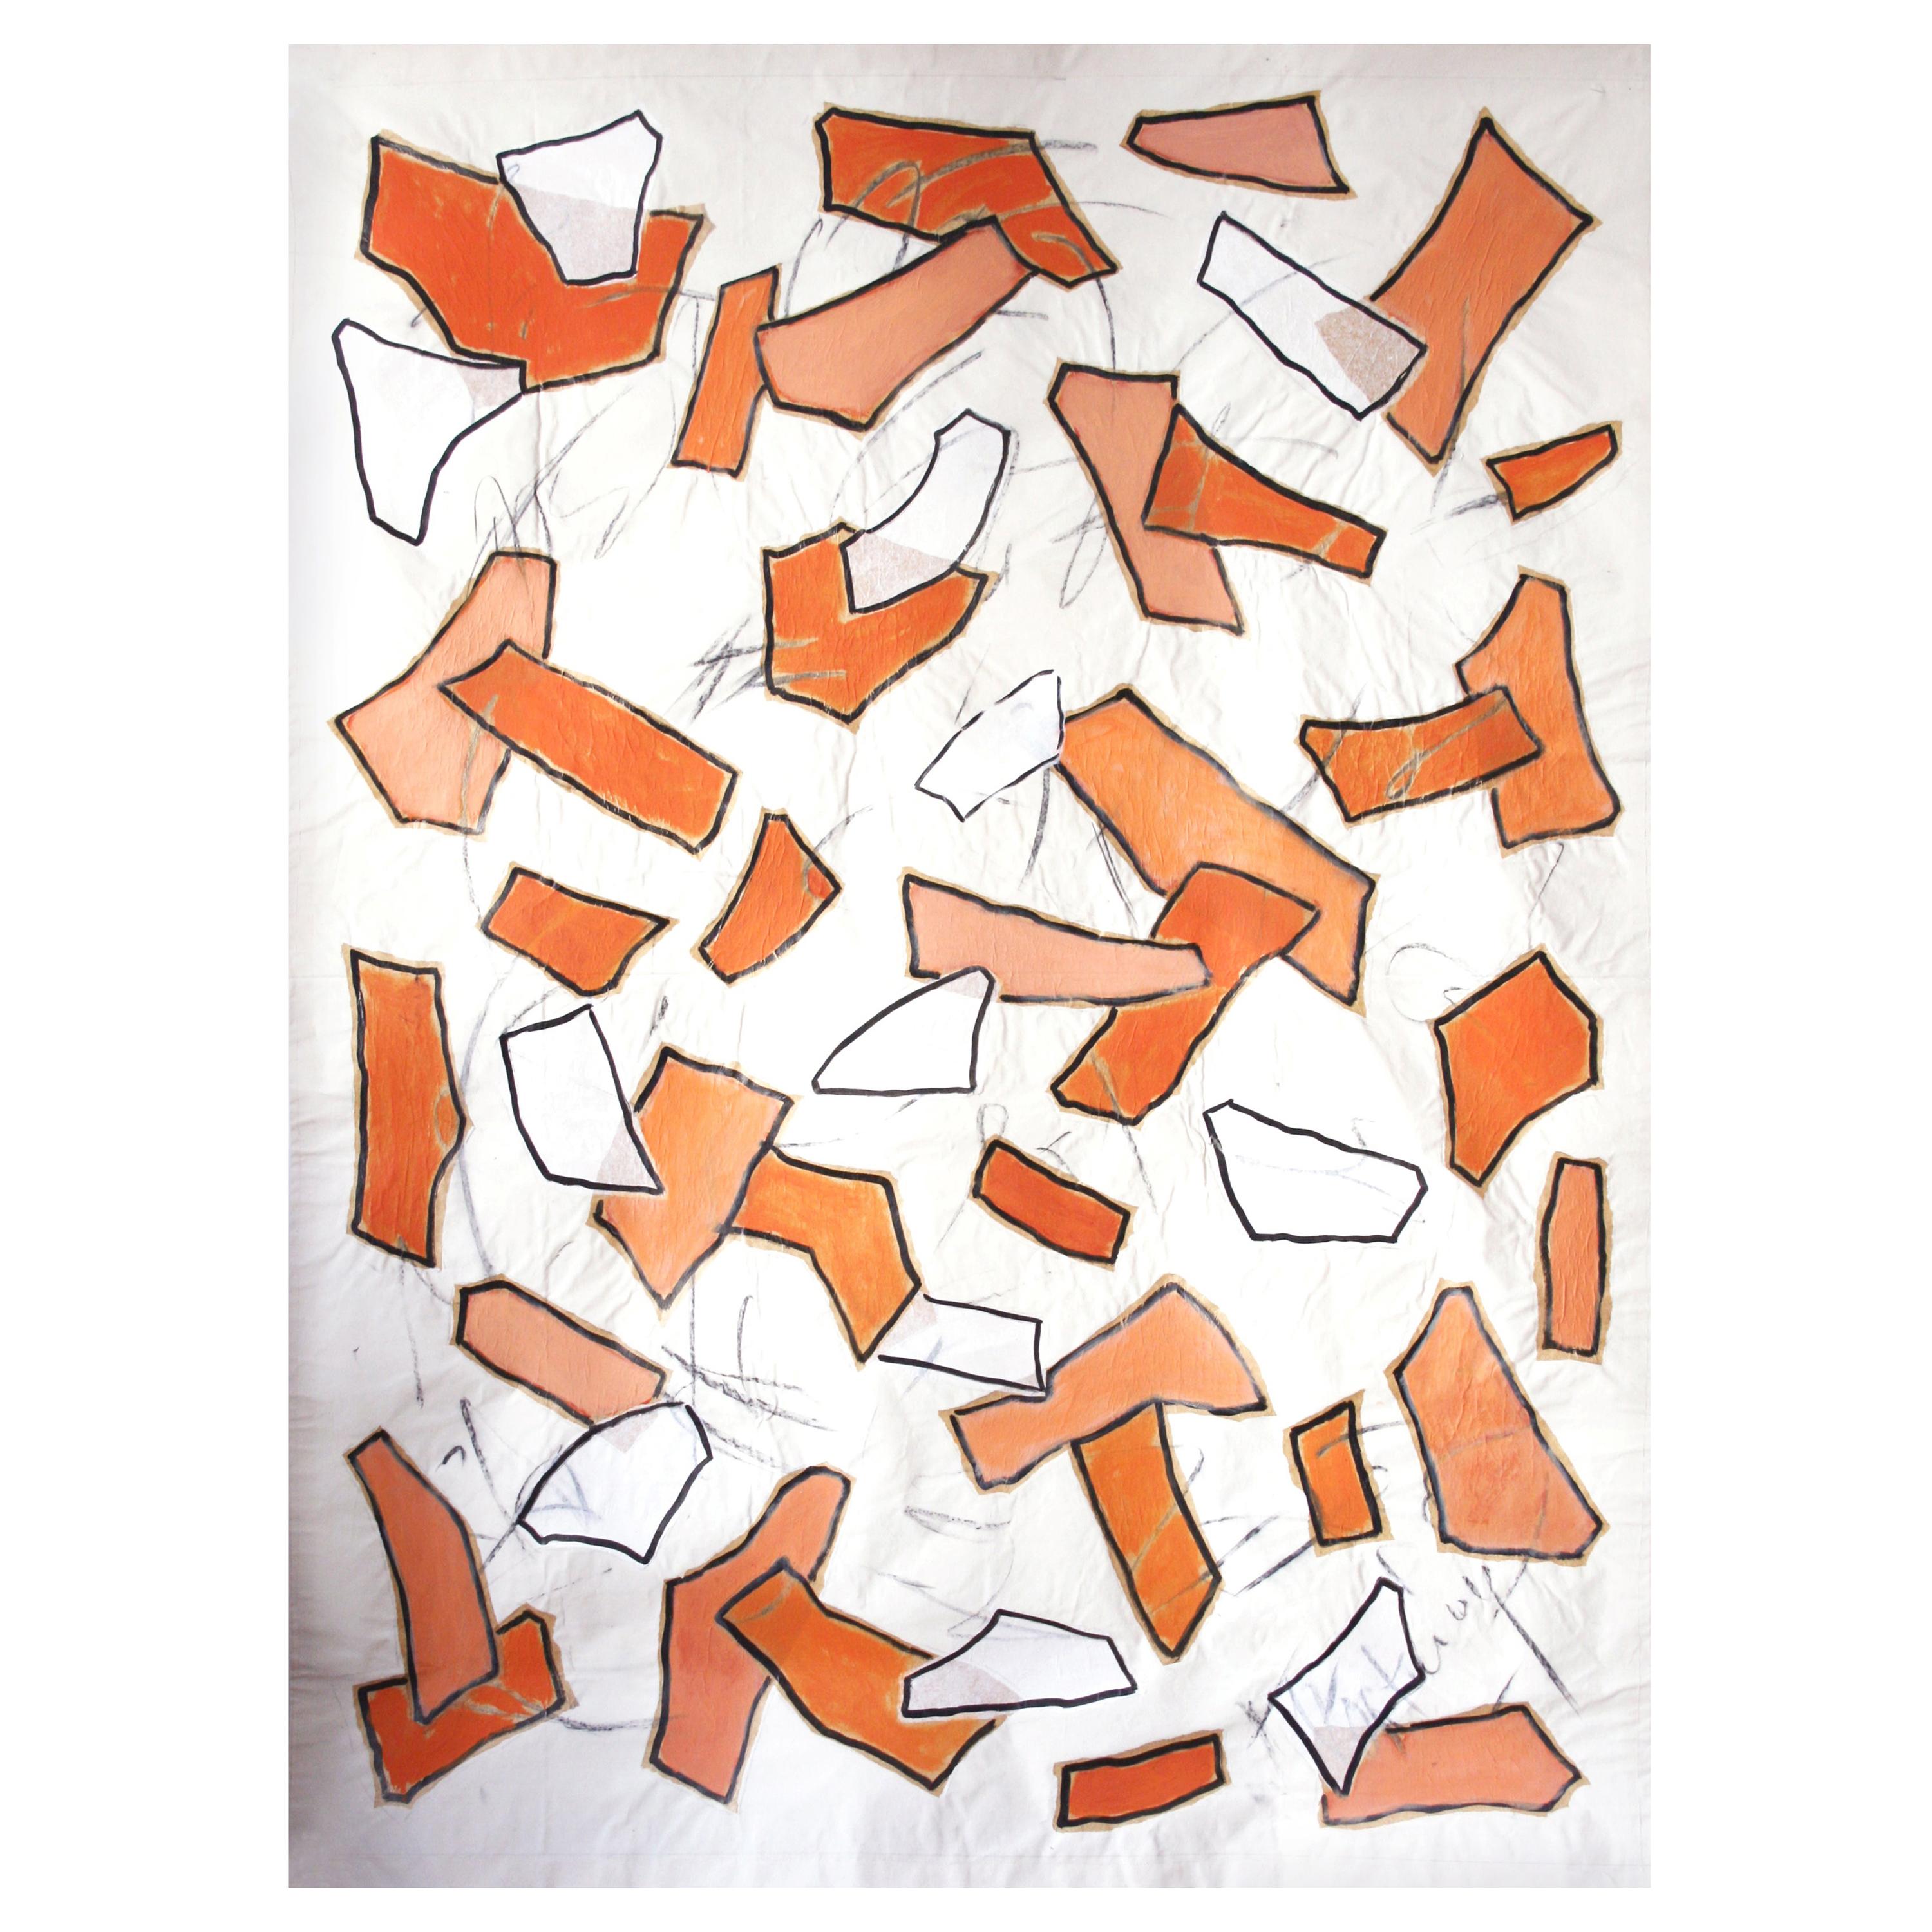 Nathalie Fontenoy French Artist, Paper Collage, Fragment # 4, Orange Suite